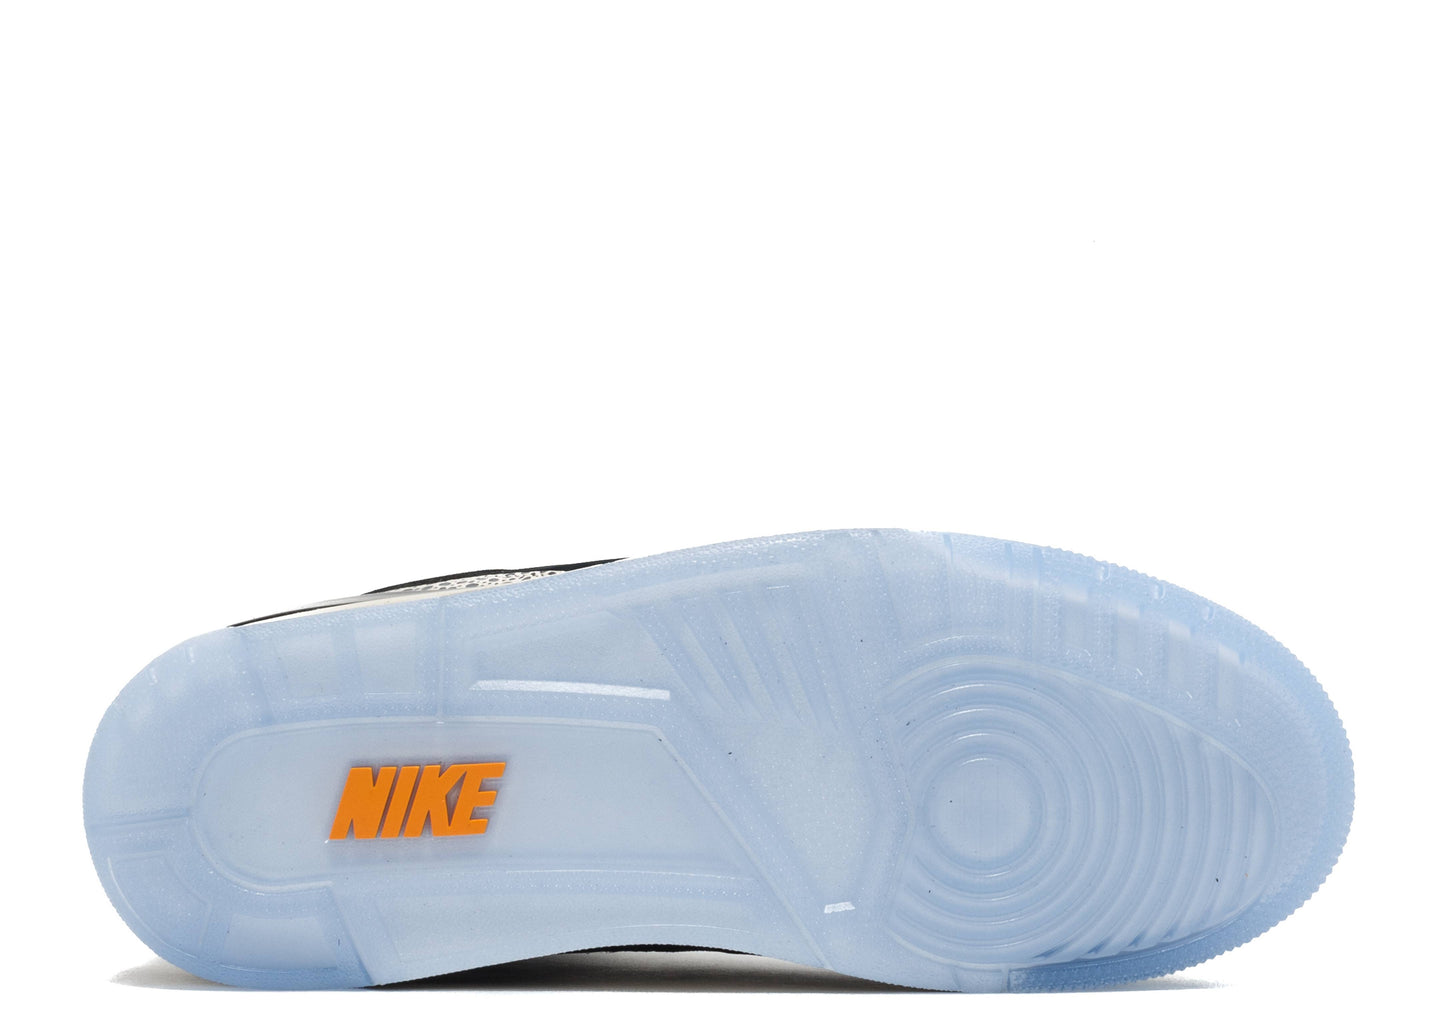 Air Jordan 3 x Nike Air Max 1 "Atmos Pack"